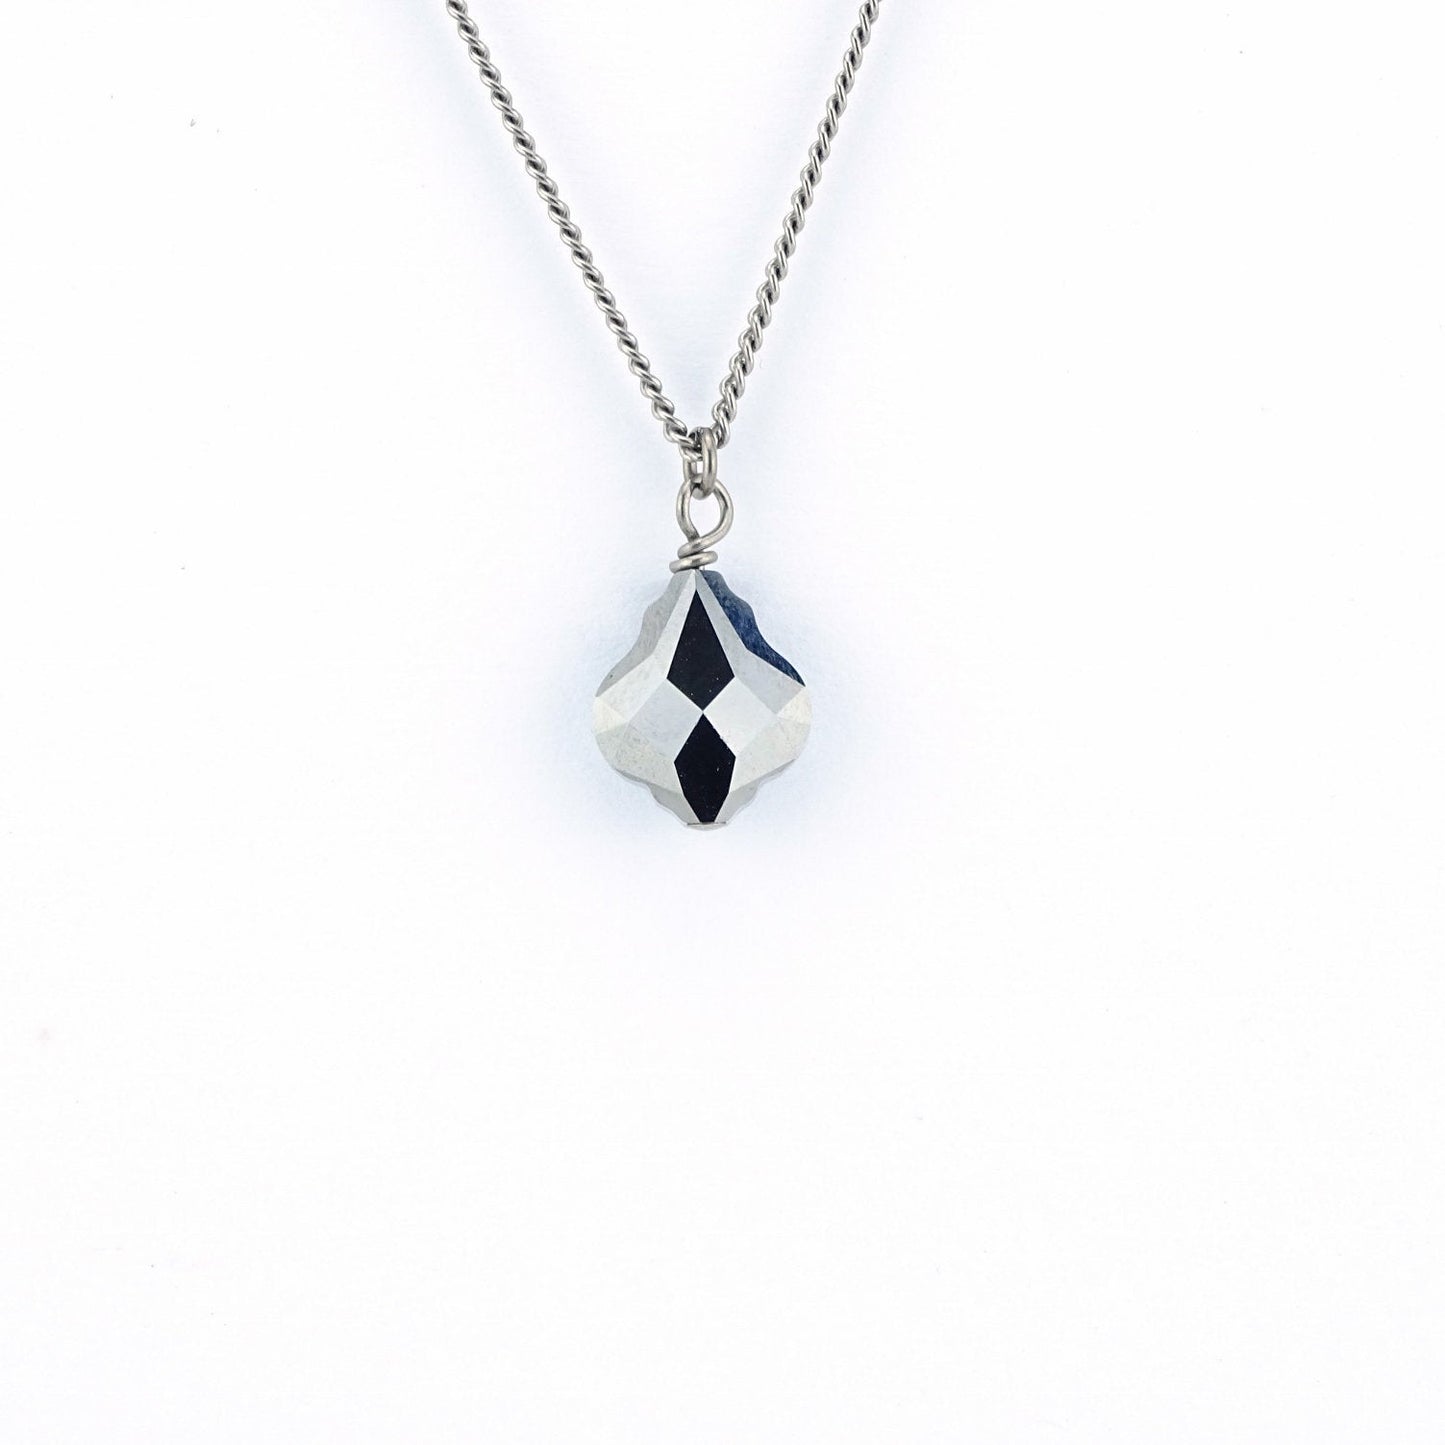 Silver Night Baroque Swarovski Crystal Titanium Necklace, Pure Titanium Chain Necklace For Sensitive Skin Hypoallergenic Nickel Free Niobium